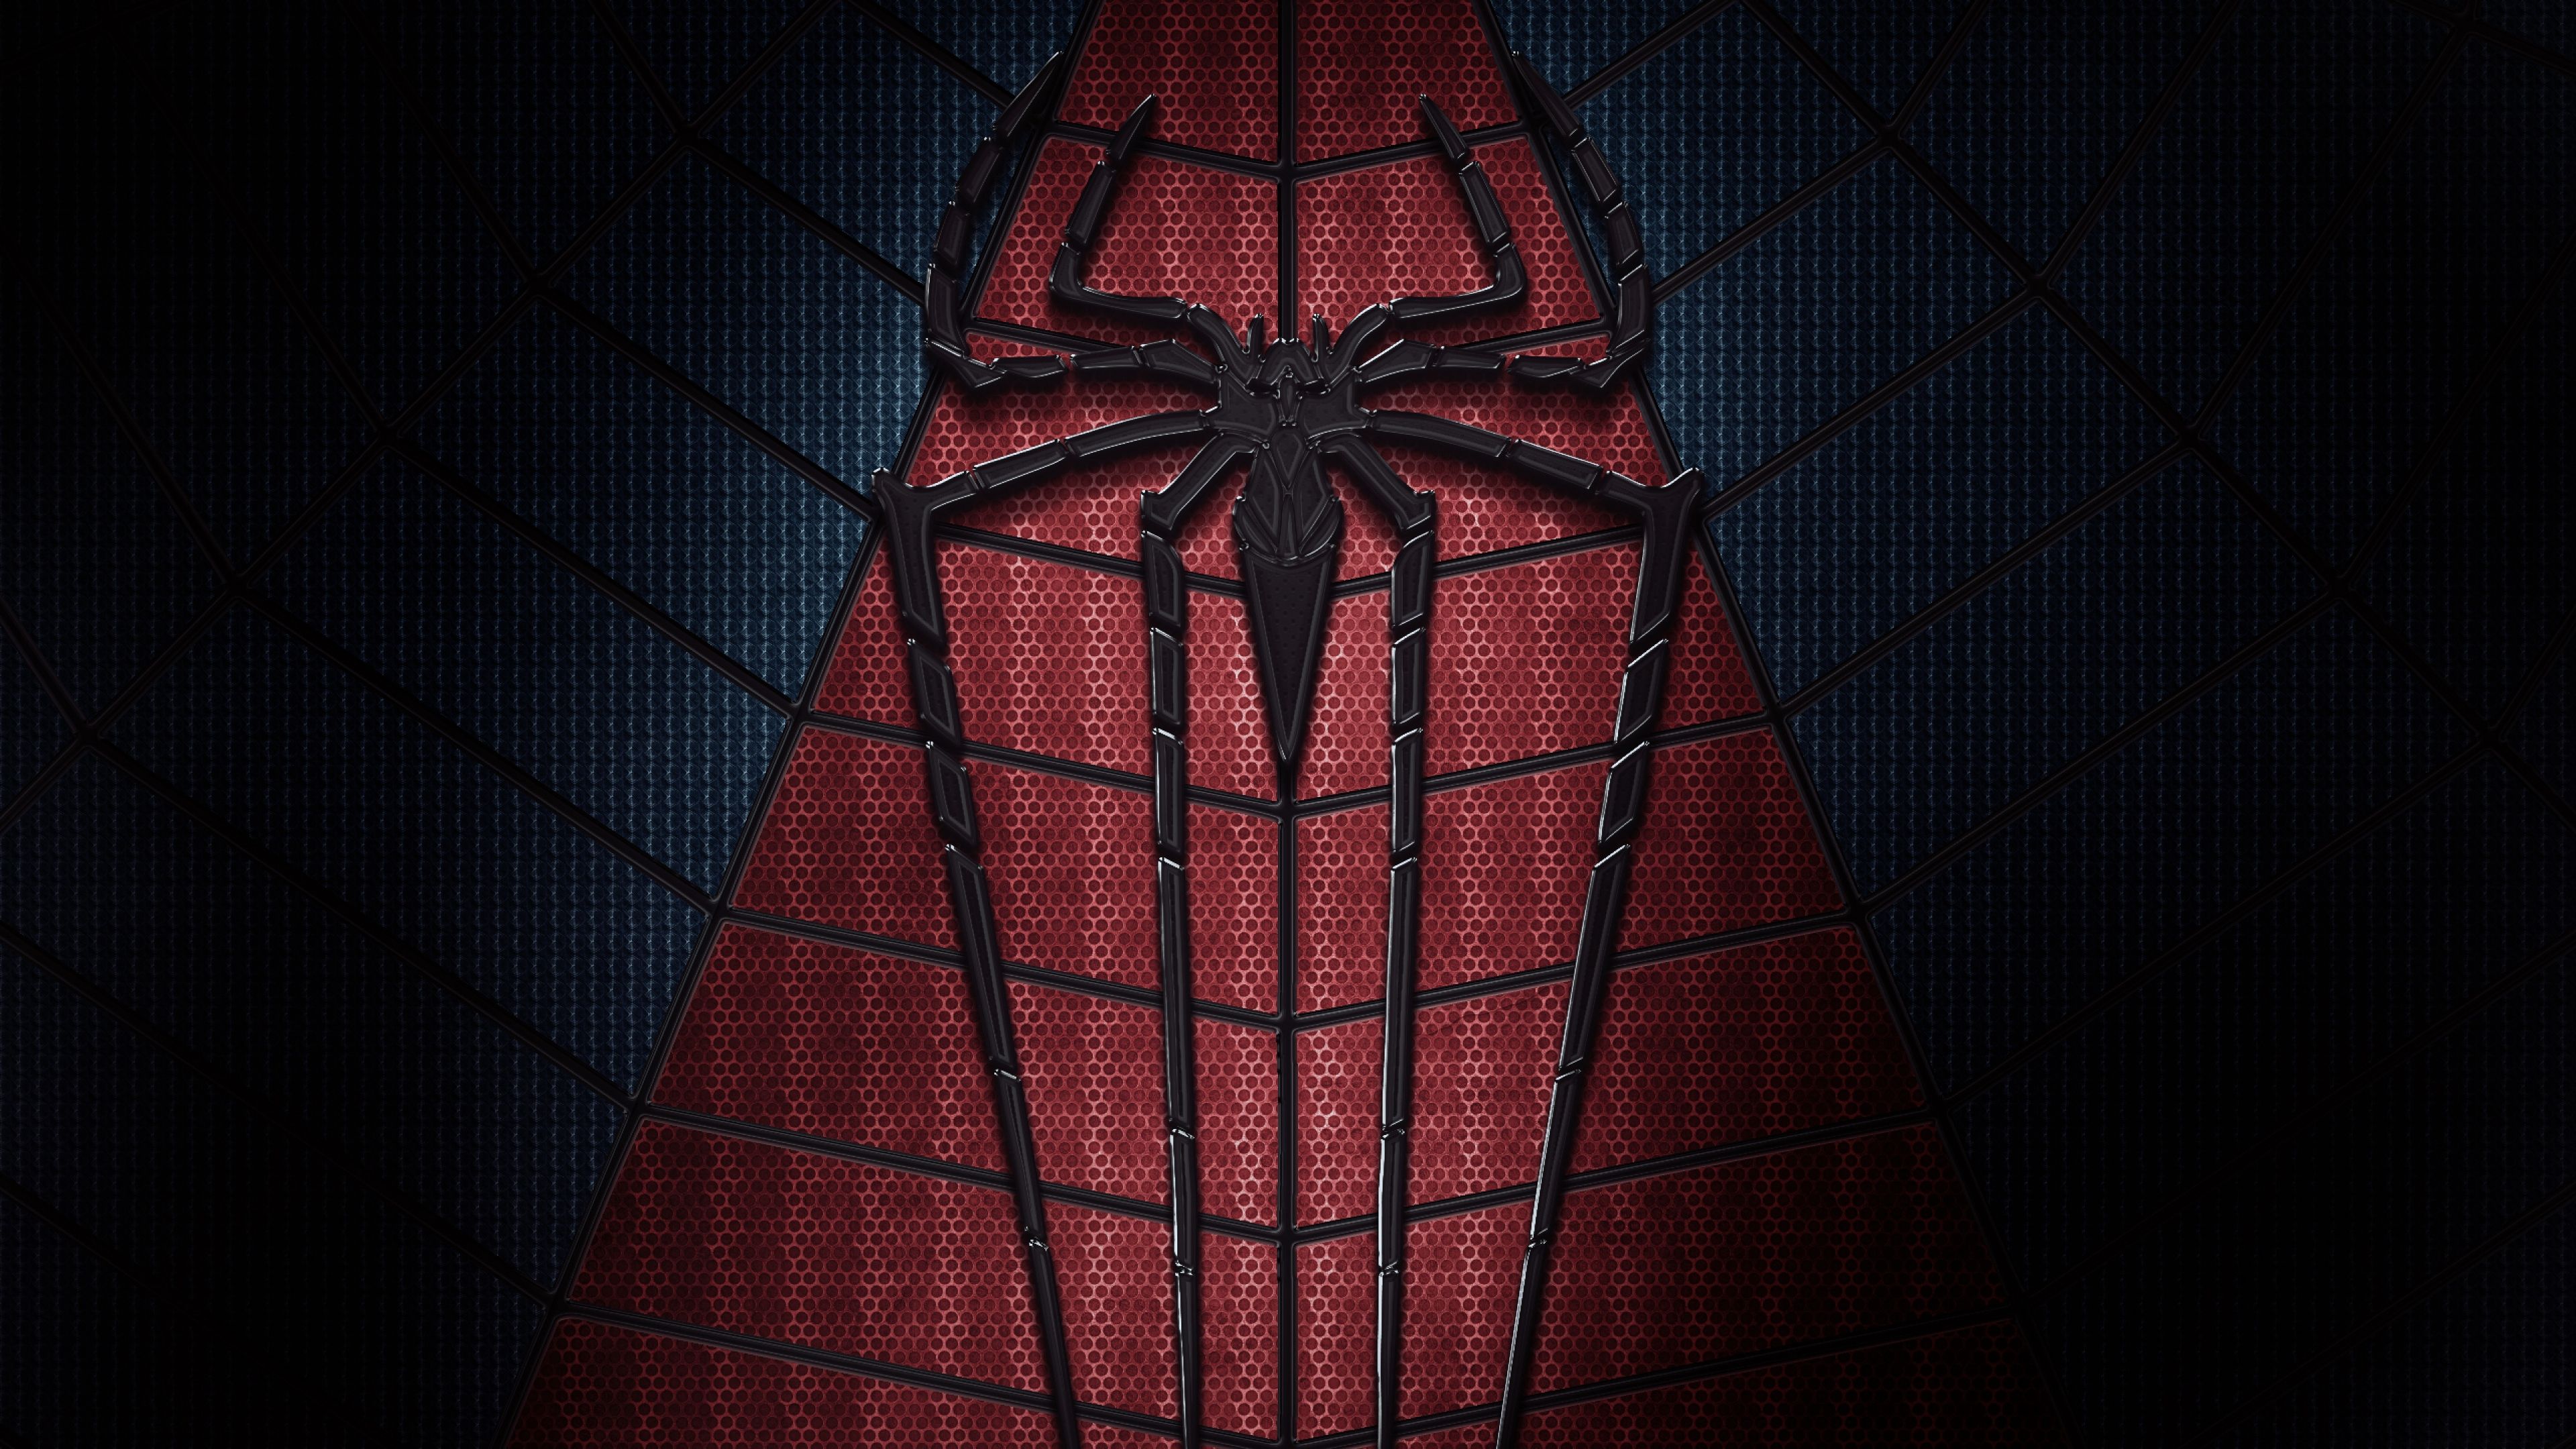 Download Wallpaper 3840x2160 The amazing spider-man 2, Logo ...